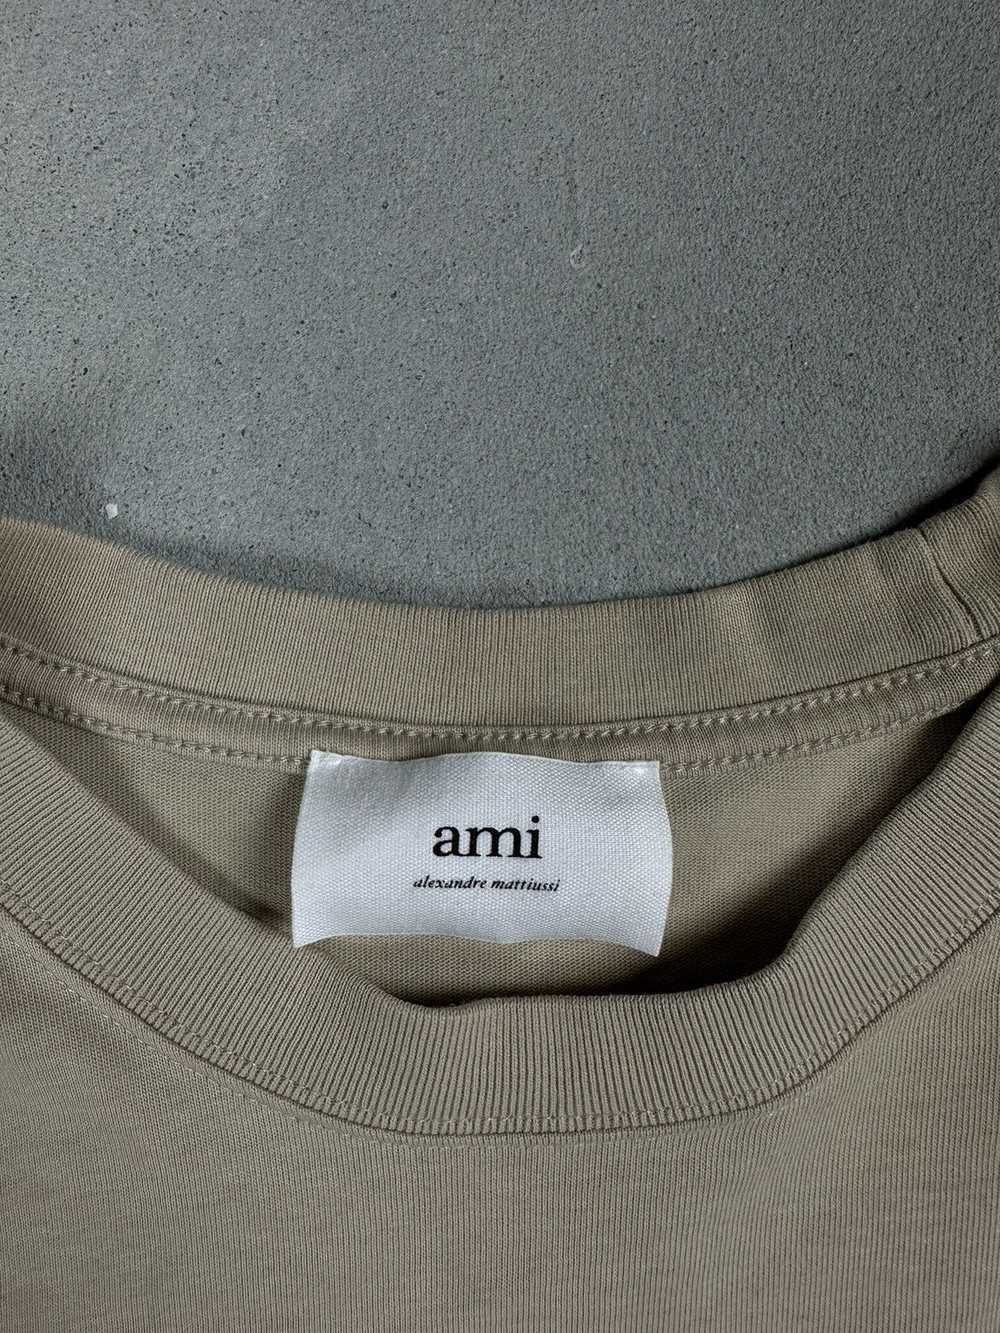 AMI AMI Paris T Shirt - image 5